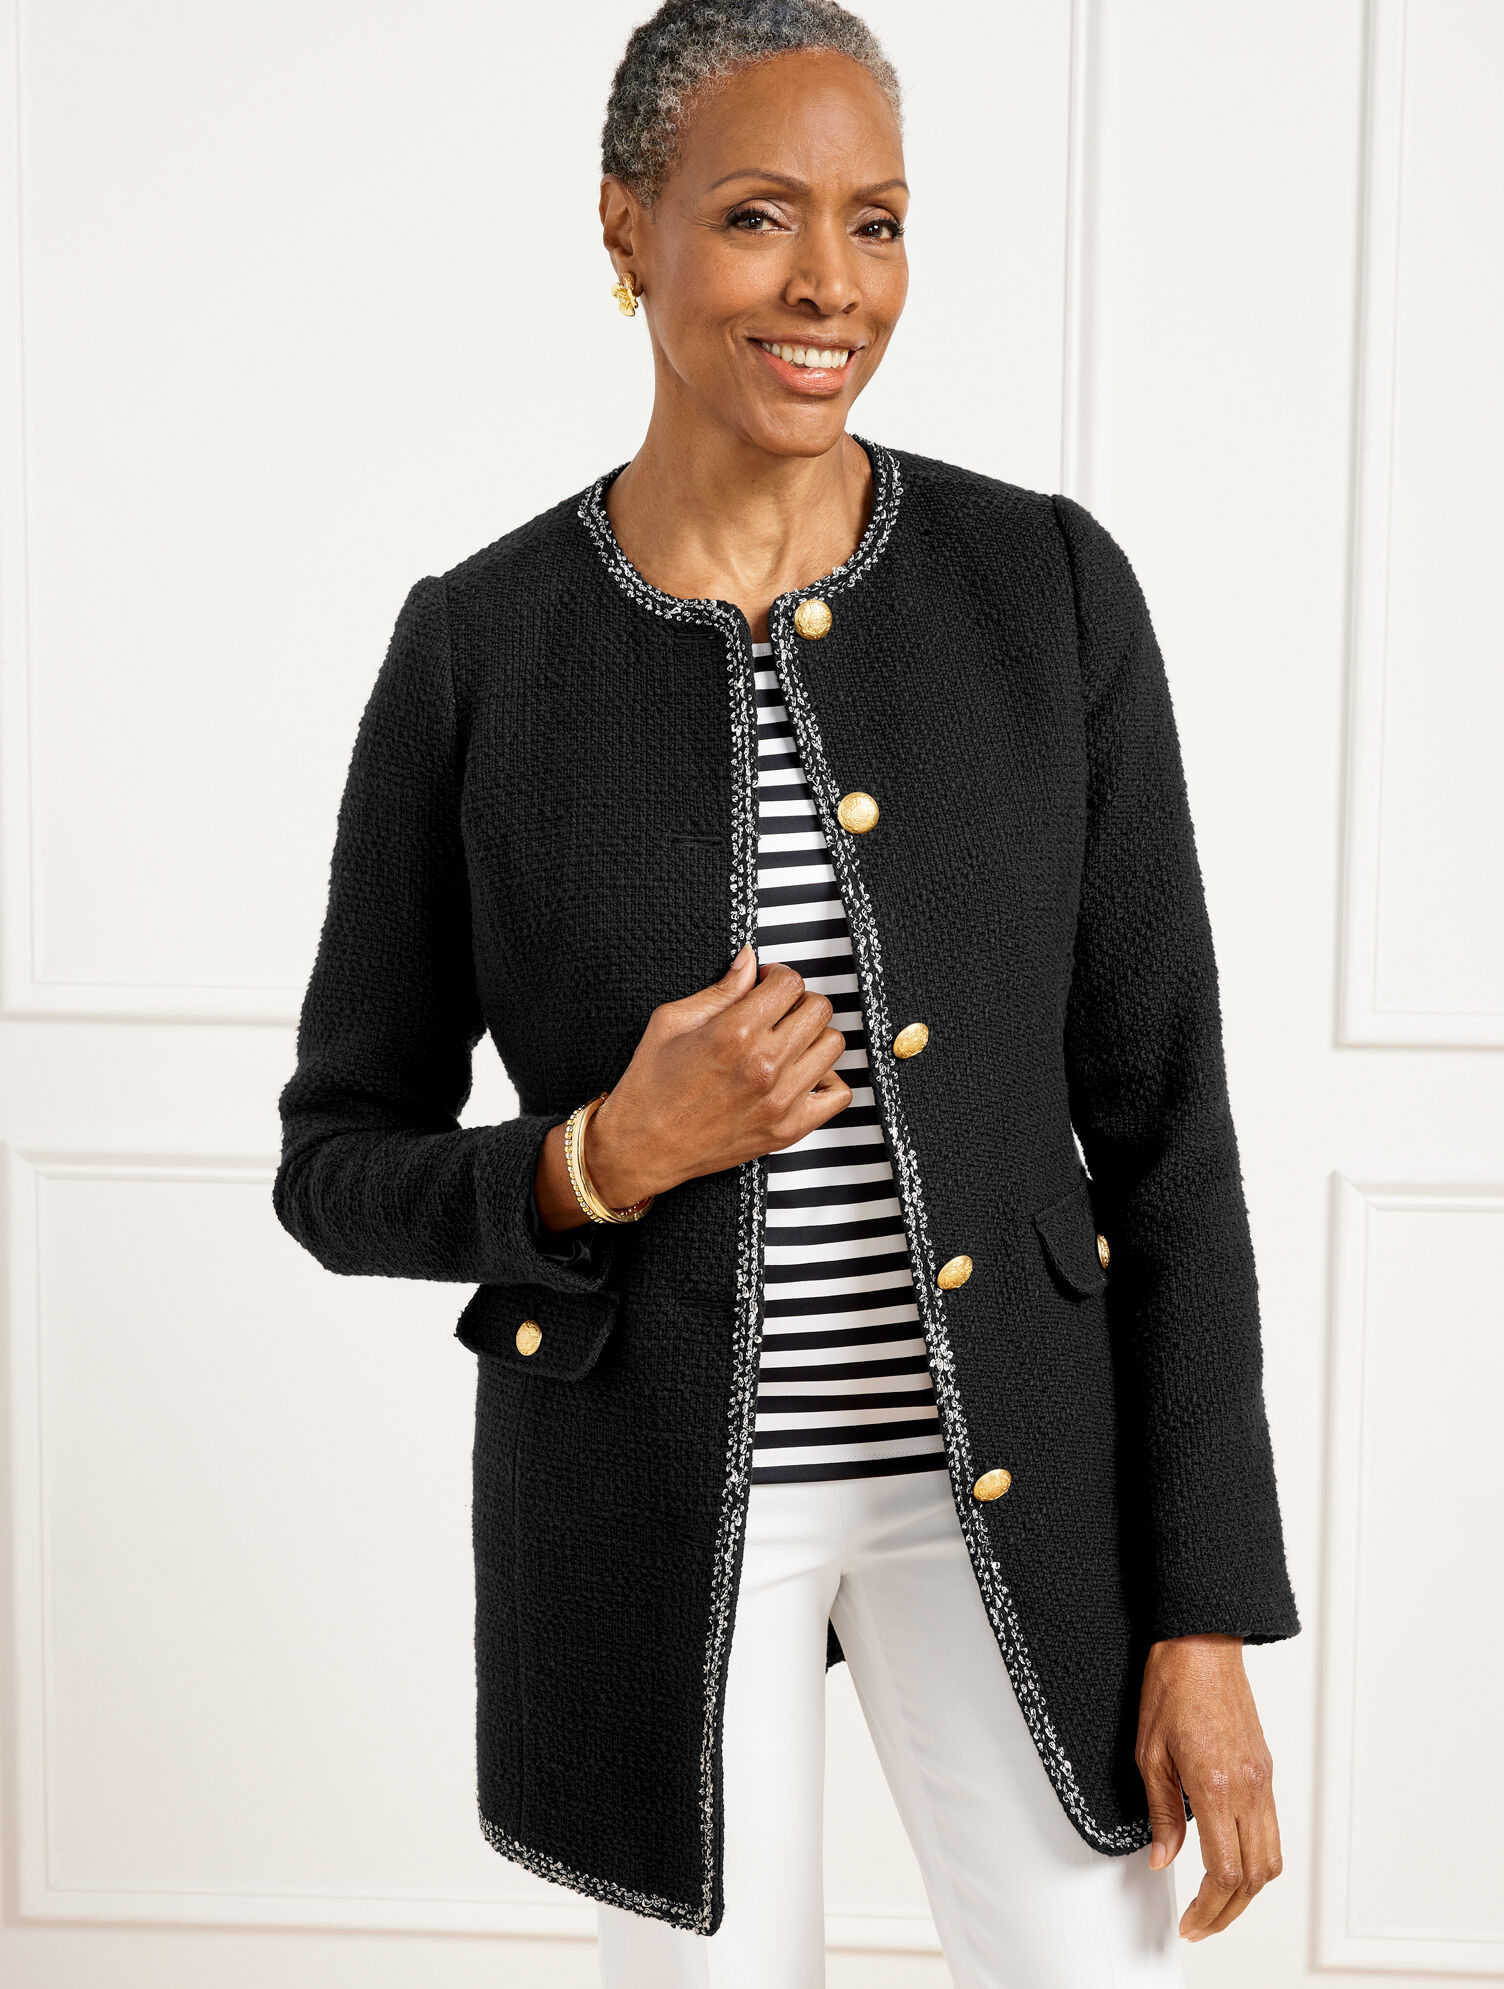 CHANEL, Jackets & Coats, Chanel Woman Tweed Jacket Size 4